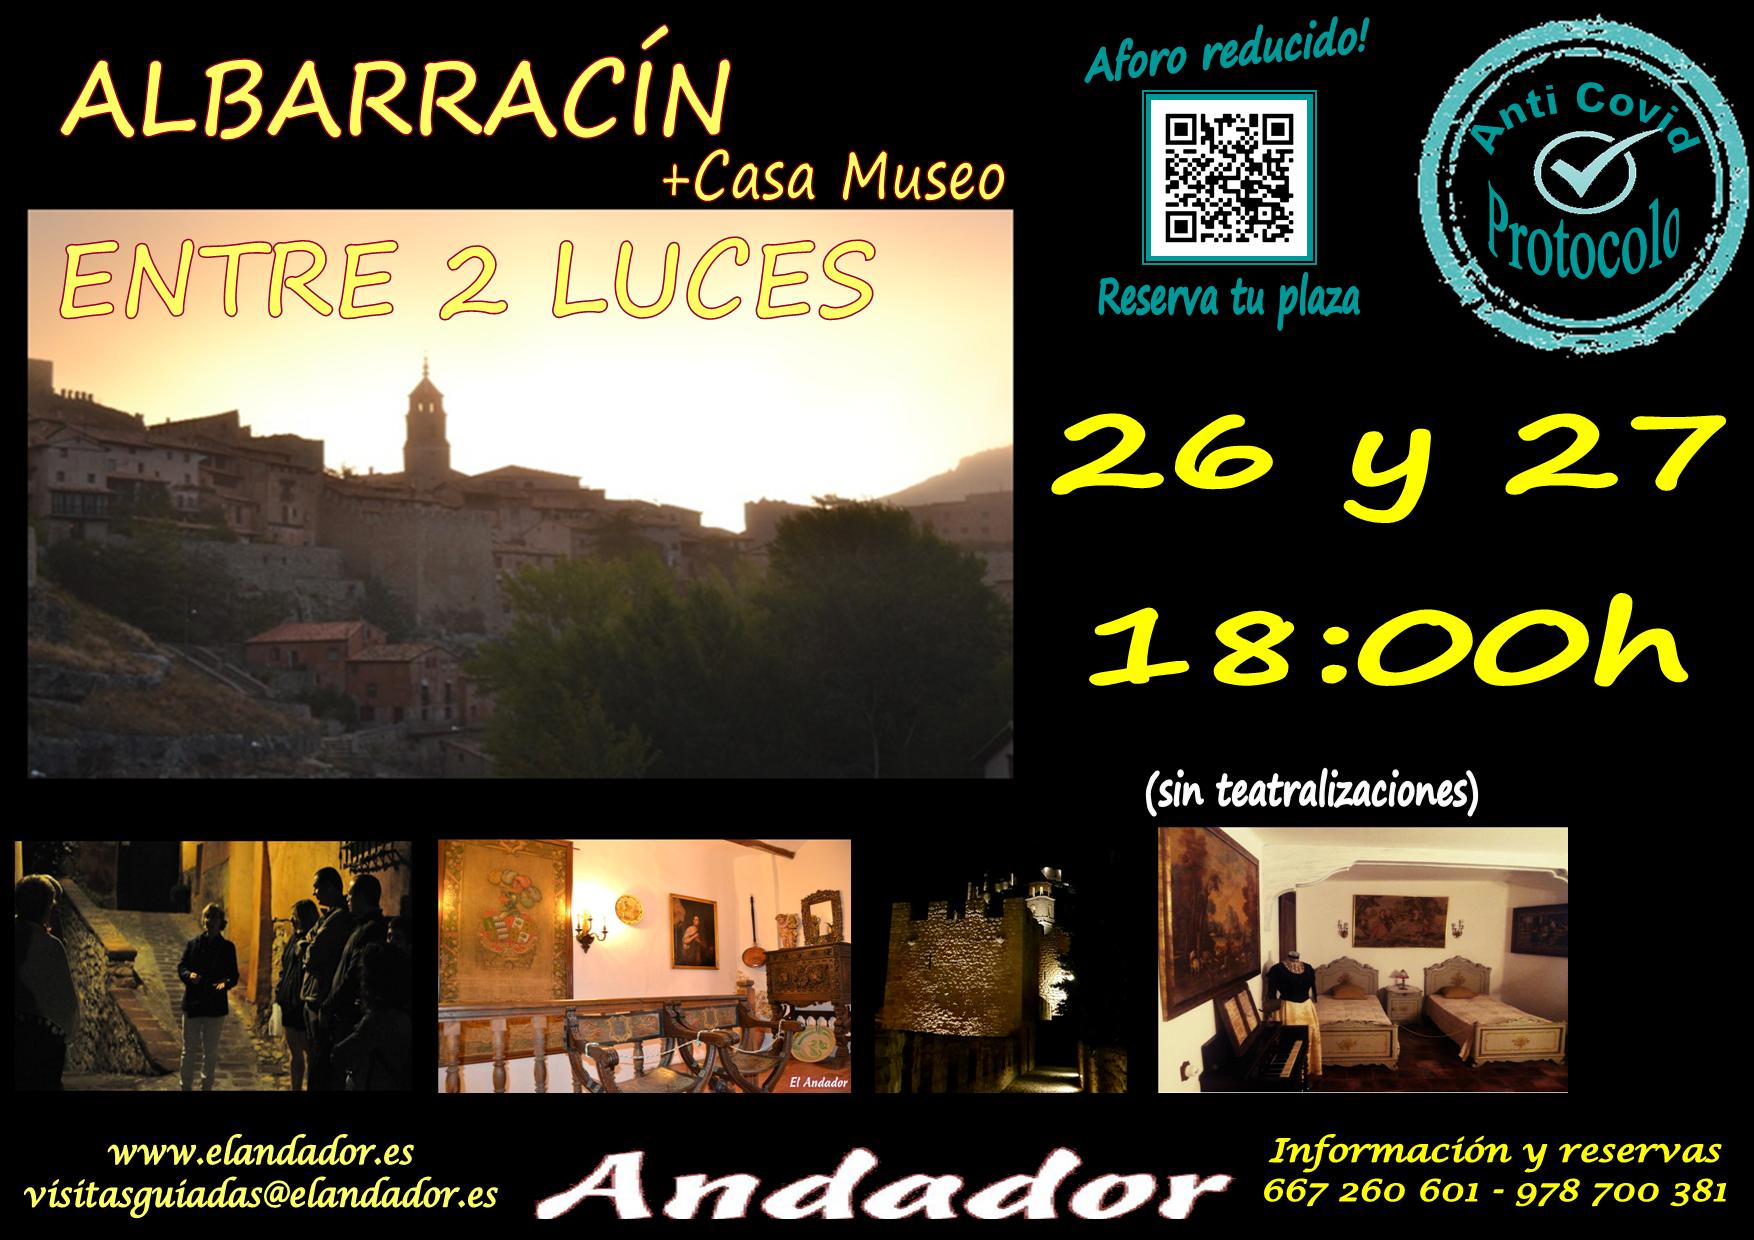 Este 26 y 27, visita guiada en Albarracín Entre 2 Luces + Casa Museo… #ReservaTuPlaza